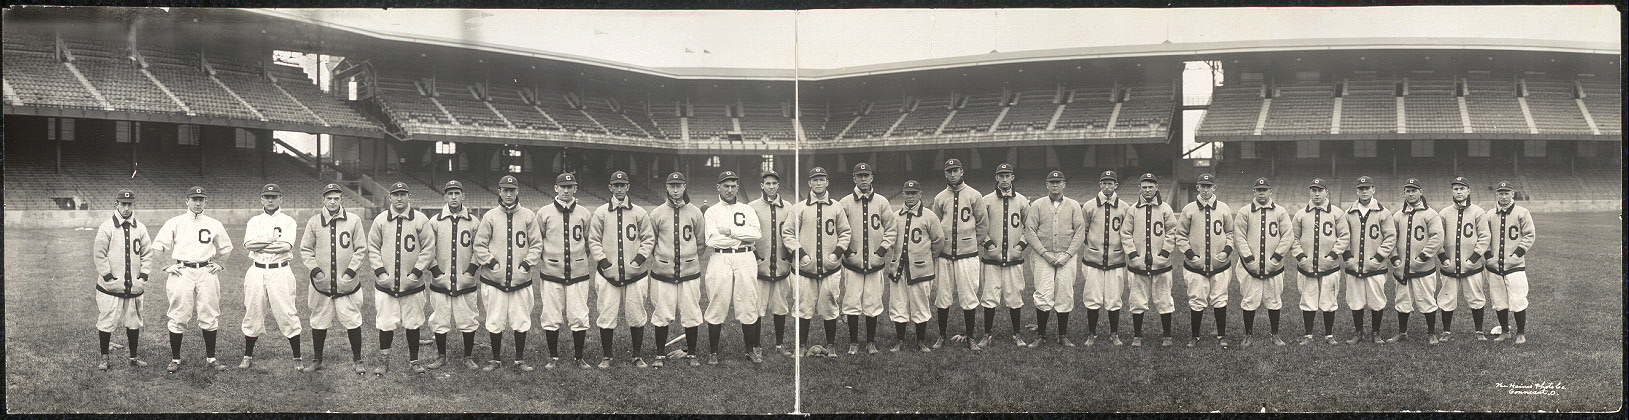 Group of Cleveland baseball players.jpg